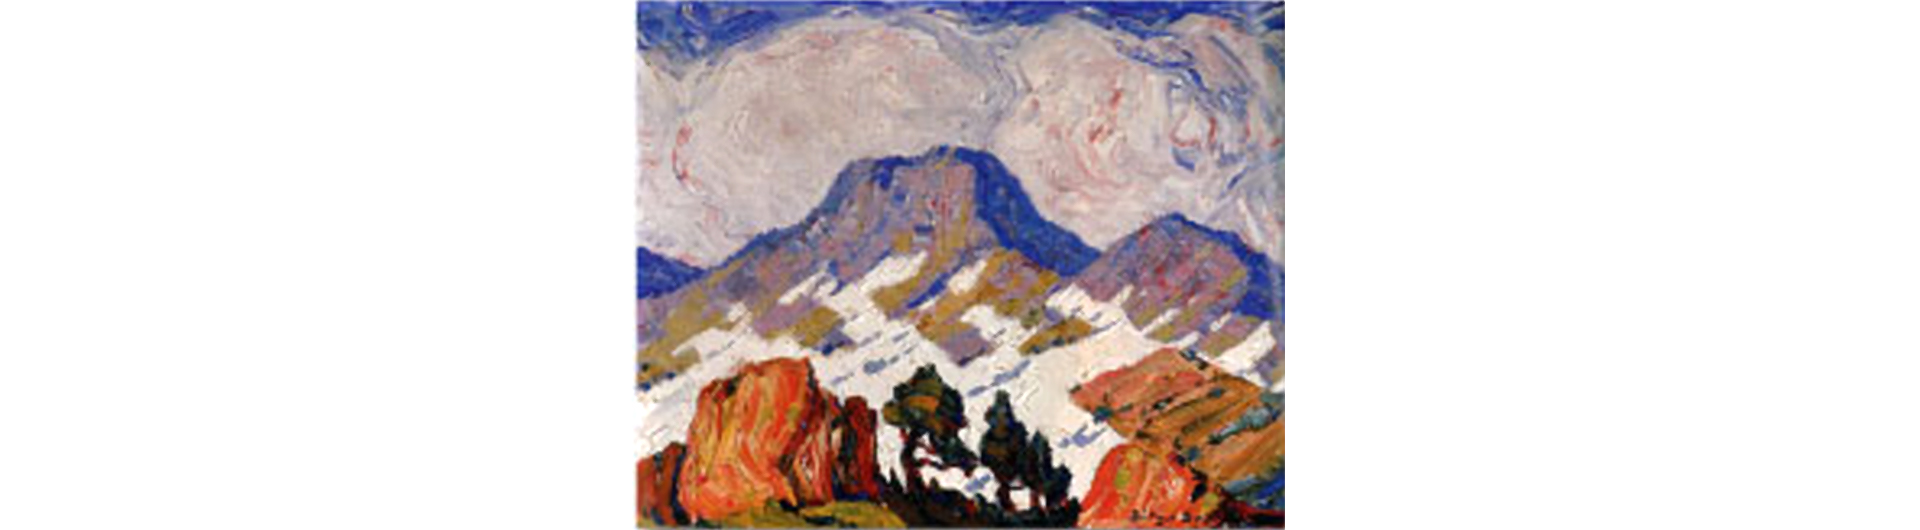 Birger Sandzén landscape painting from the Moffett Collection